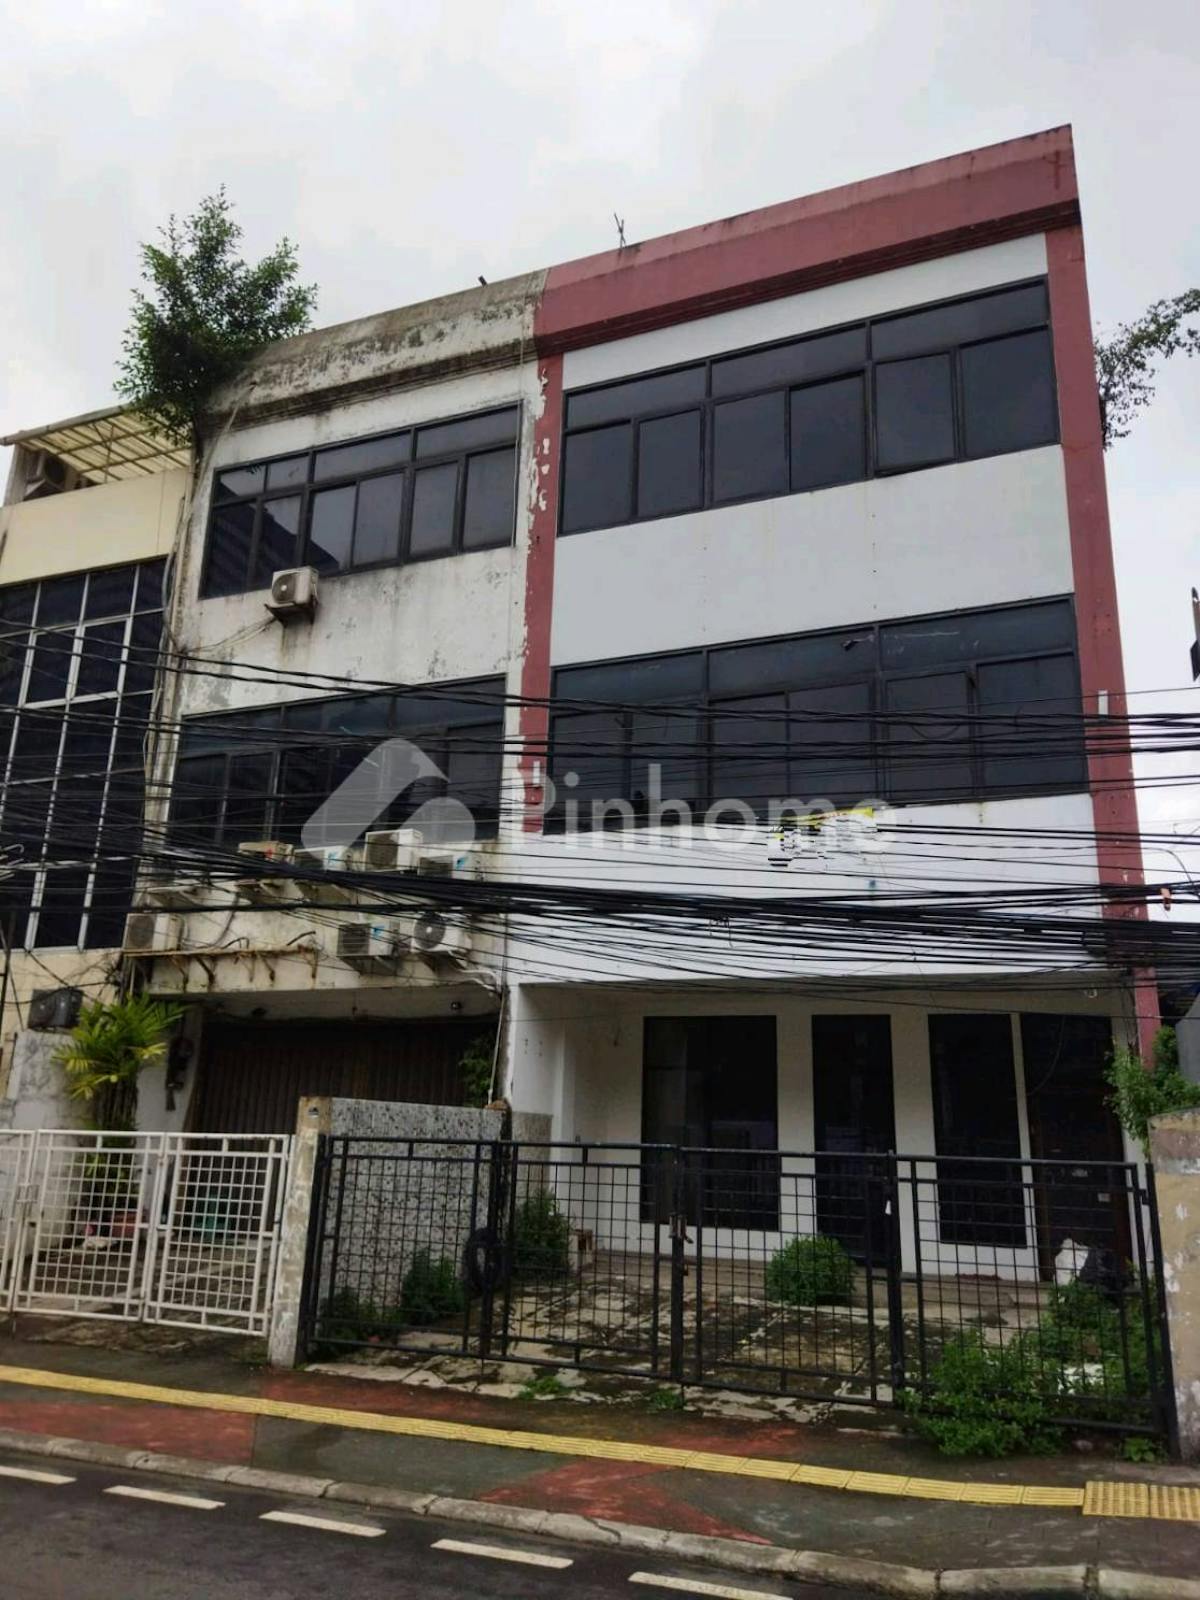 Disewakan Ruko Lokasi Strategis di Jl. Kendal, Dukuh Atas, Jakarta Pusat - Gambar 2